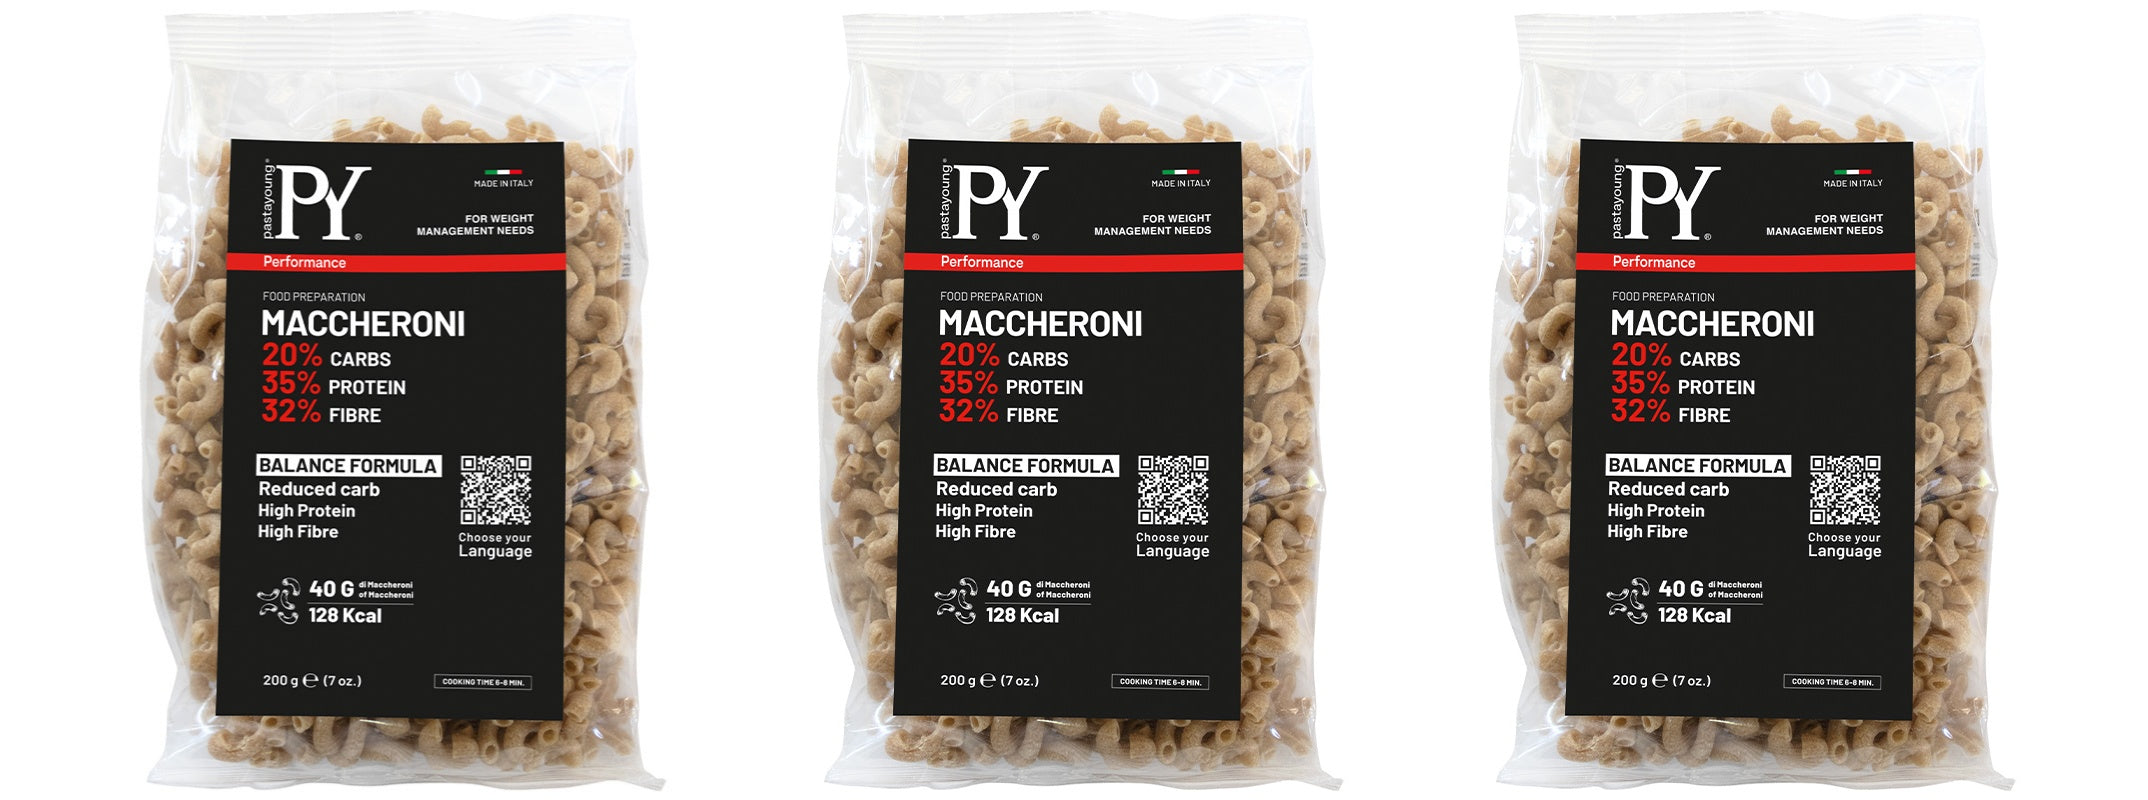 Reduced Carb Balanced Formula Pasta by Pasta Young - Maccheroni - High-quality Pasta by Pasta Young at 